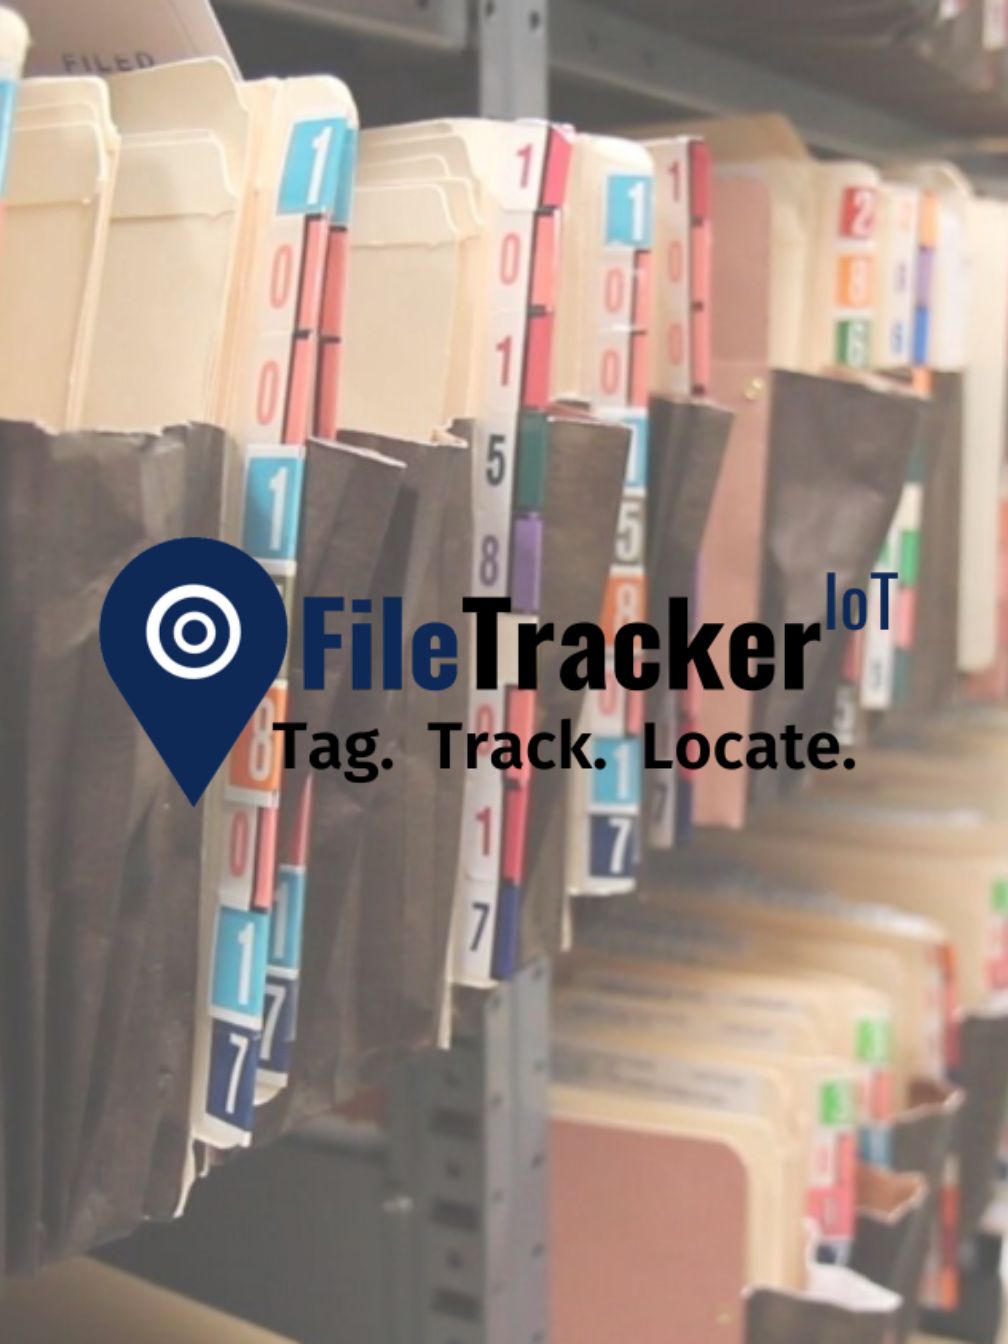 FileTrackerIoT Logo over a photo of files.